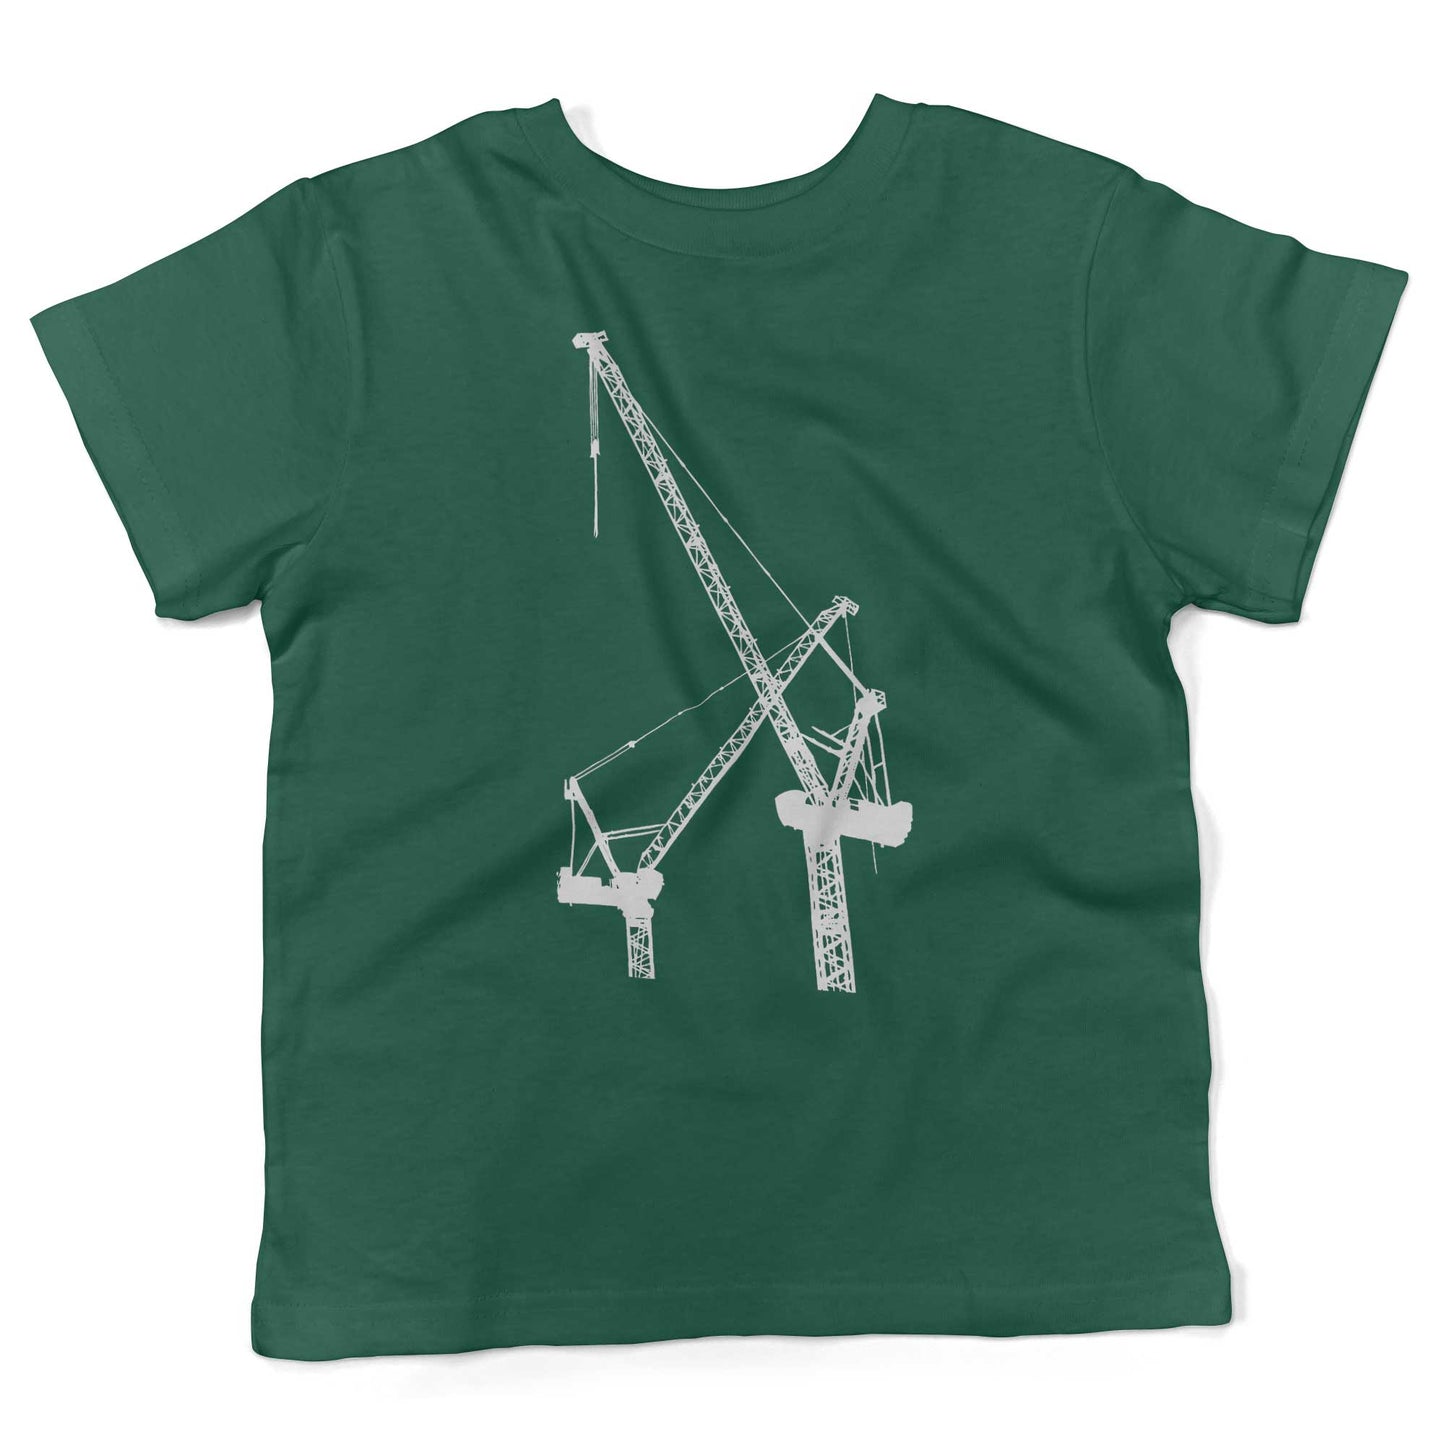 Construction Cranes Toddler Shirt-Kelly Green-2T